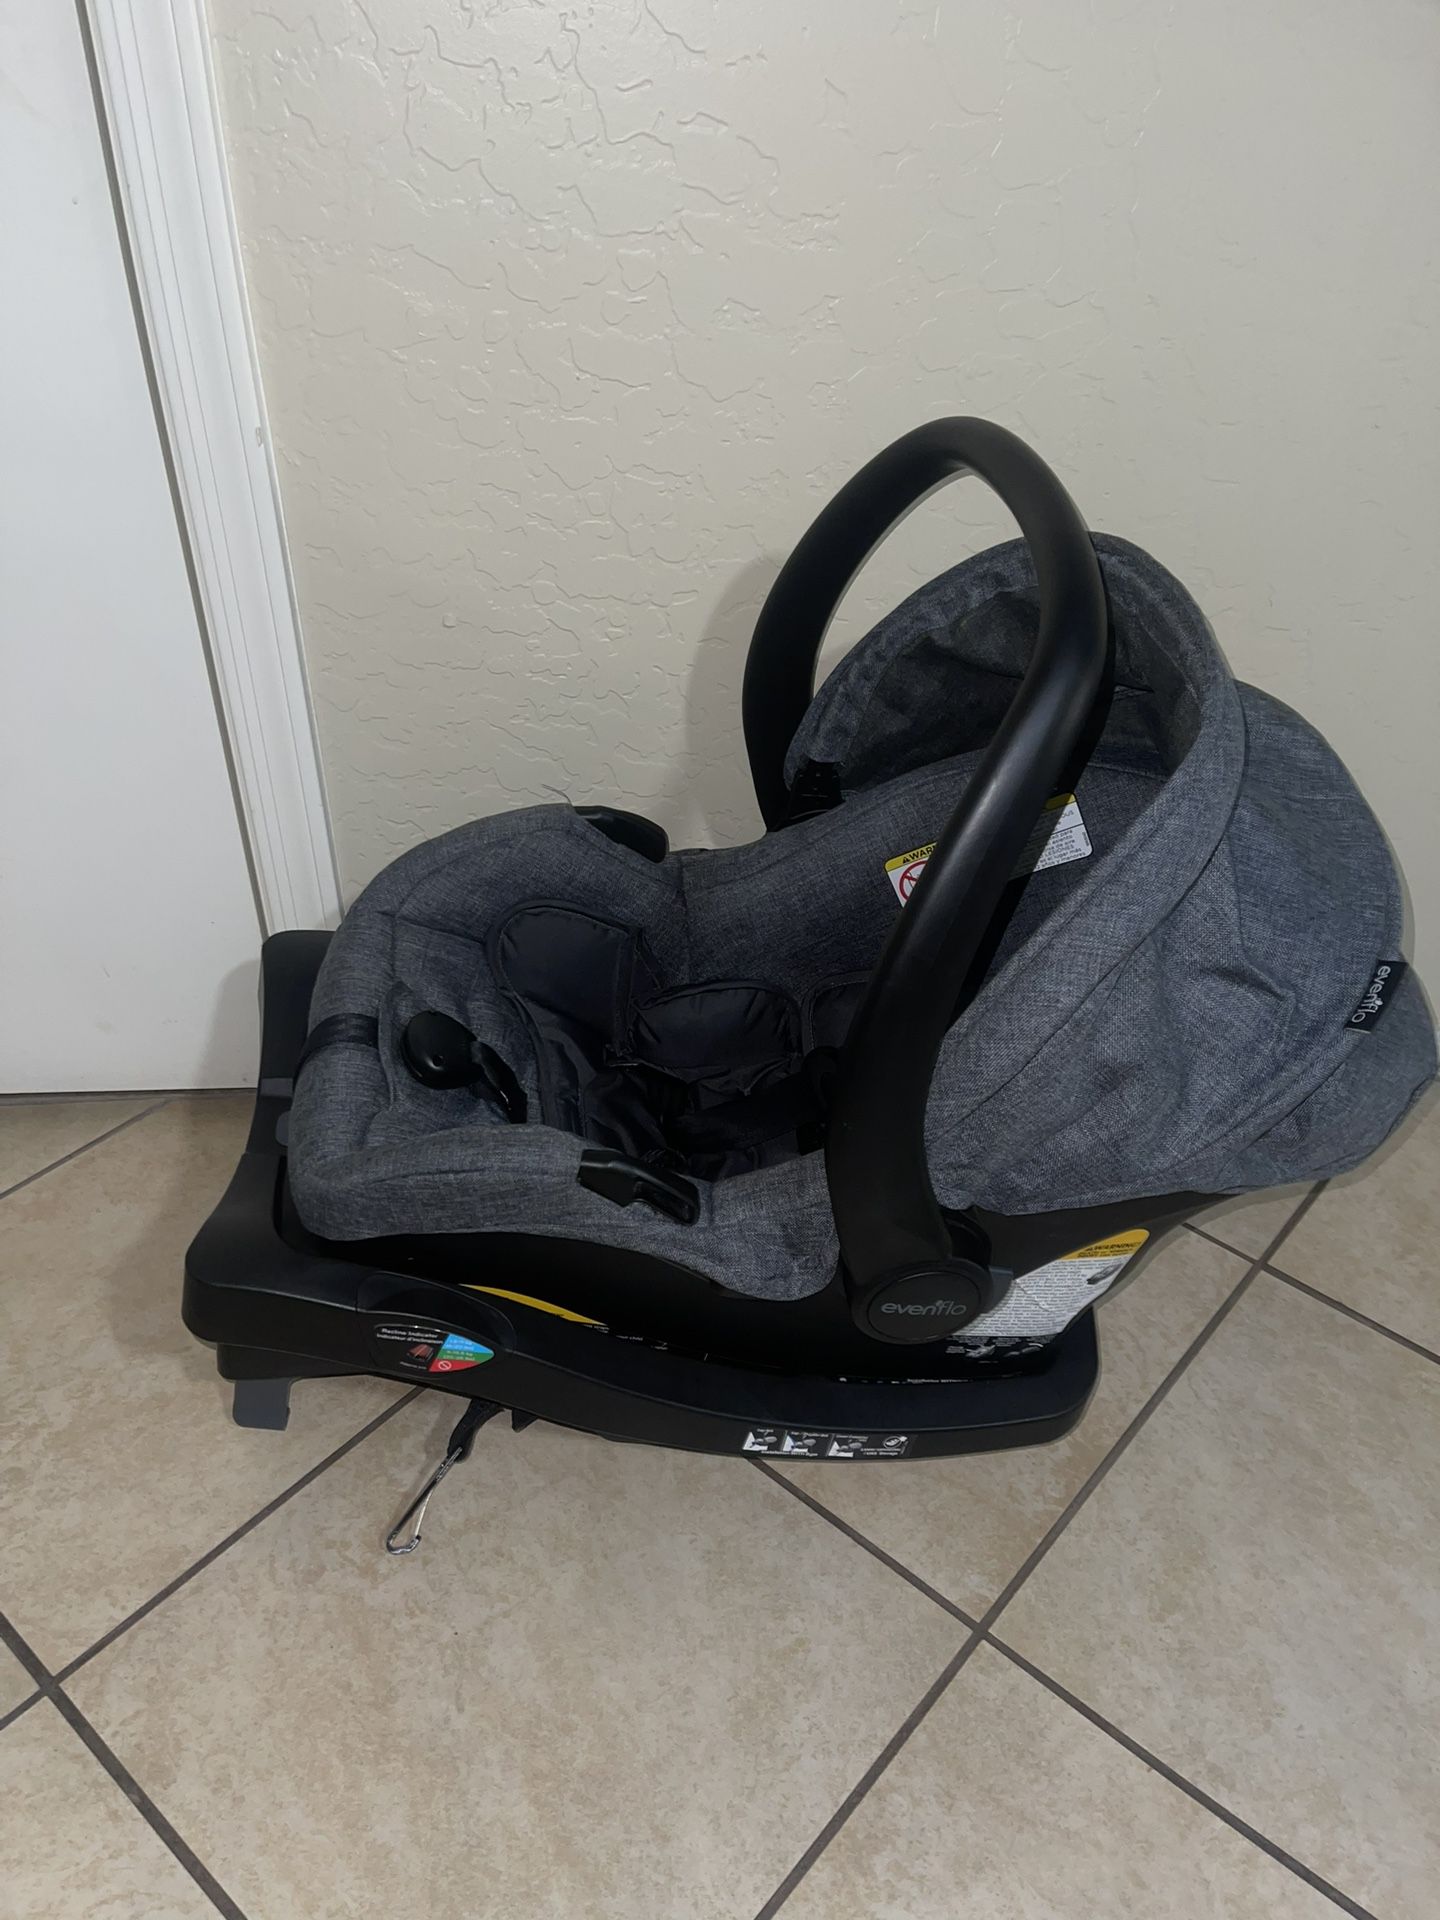 Evenflo Litemax Sport Infant Car Seat